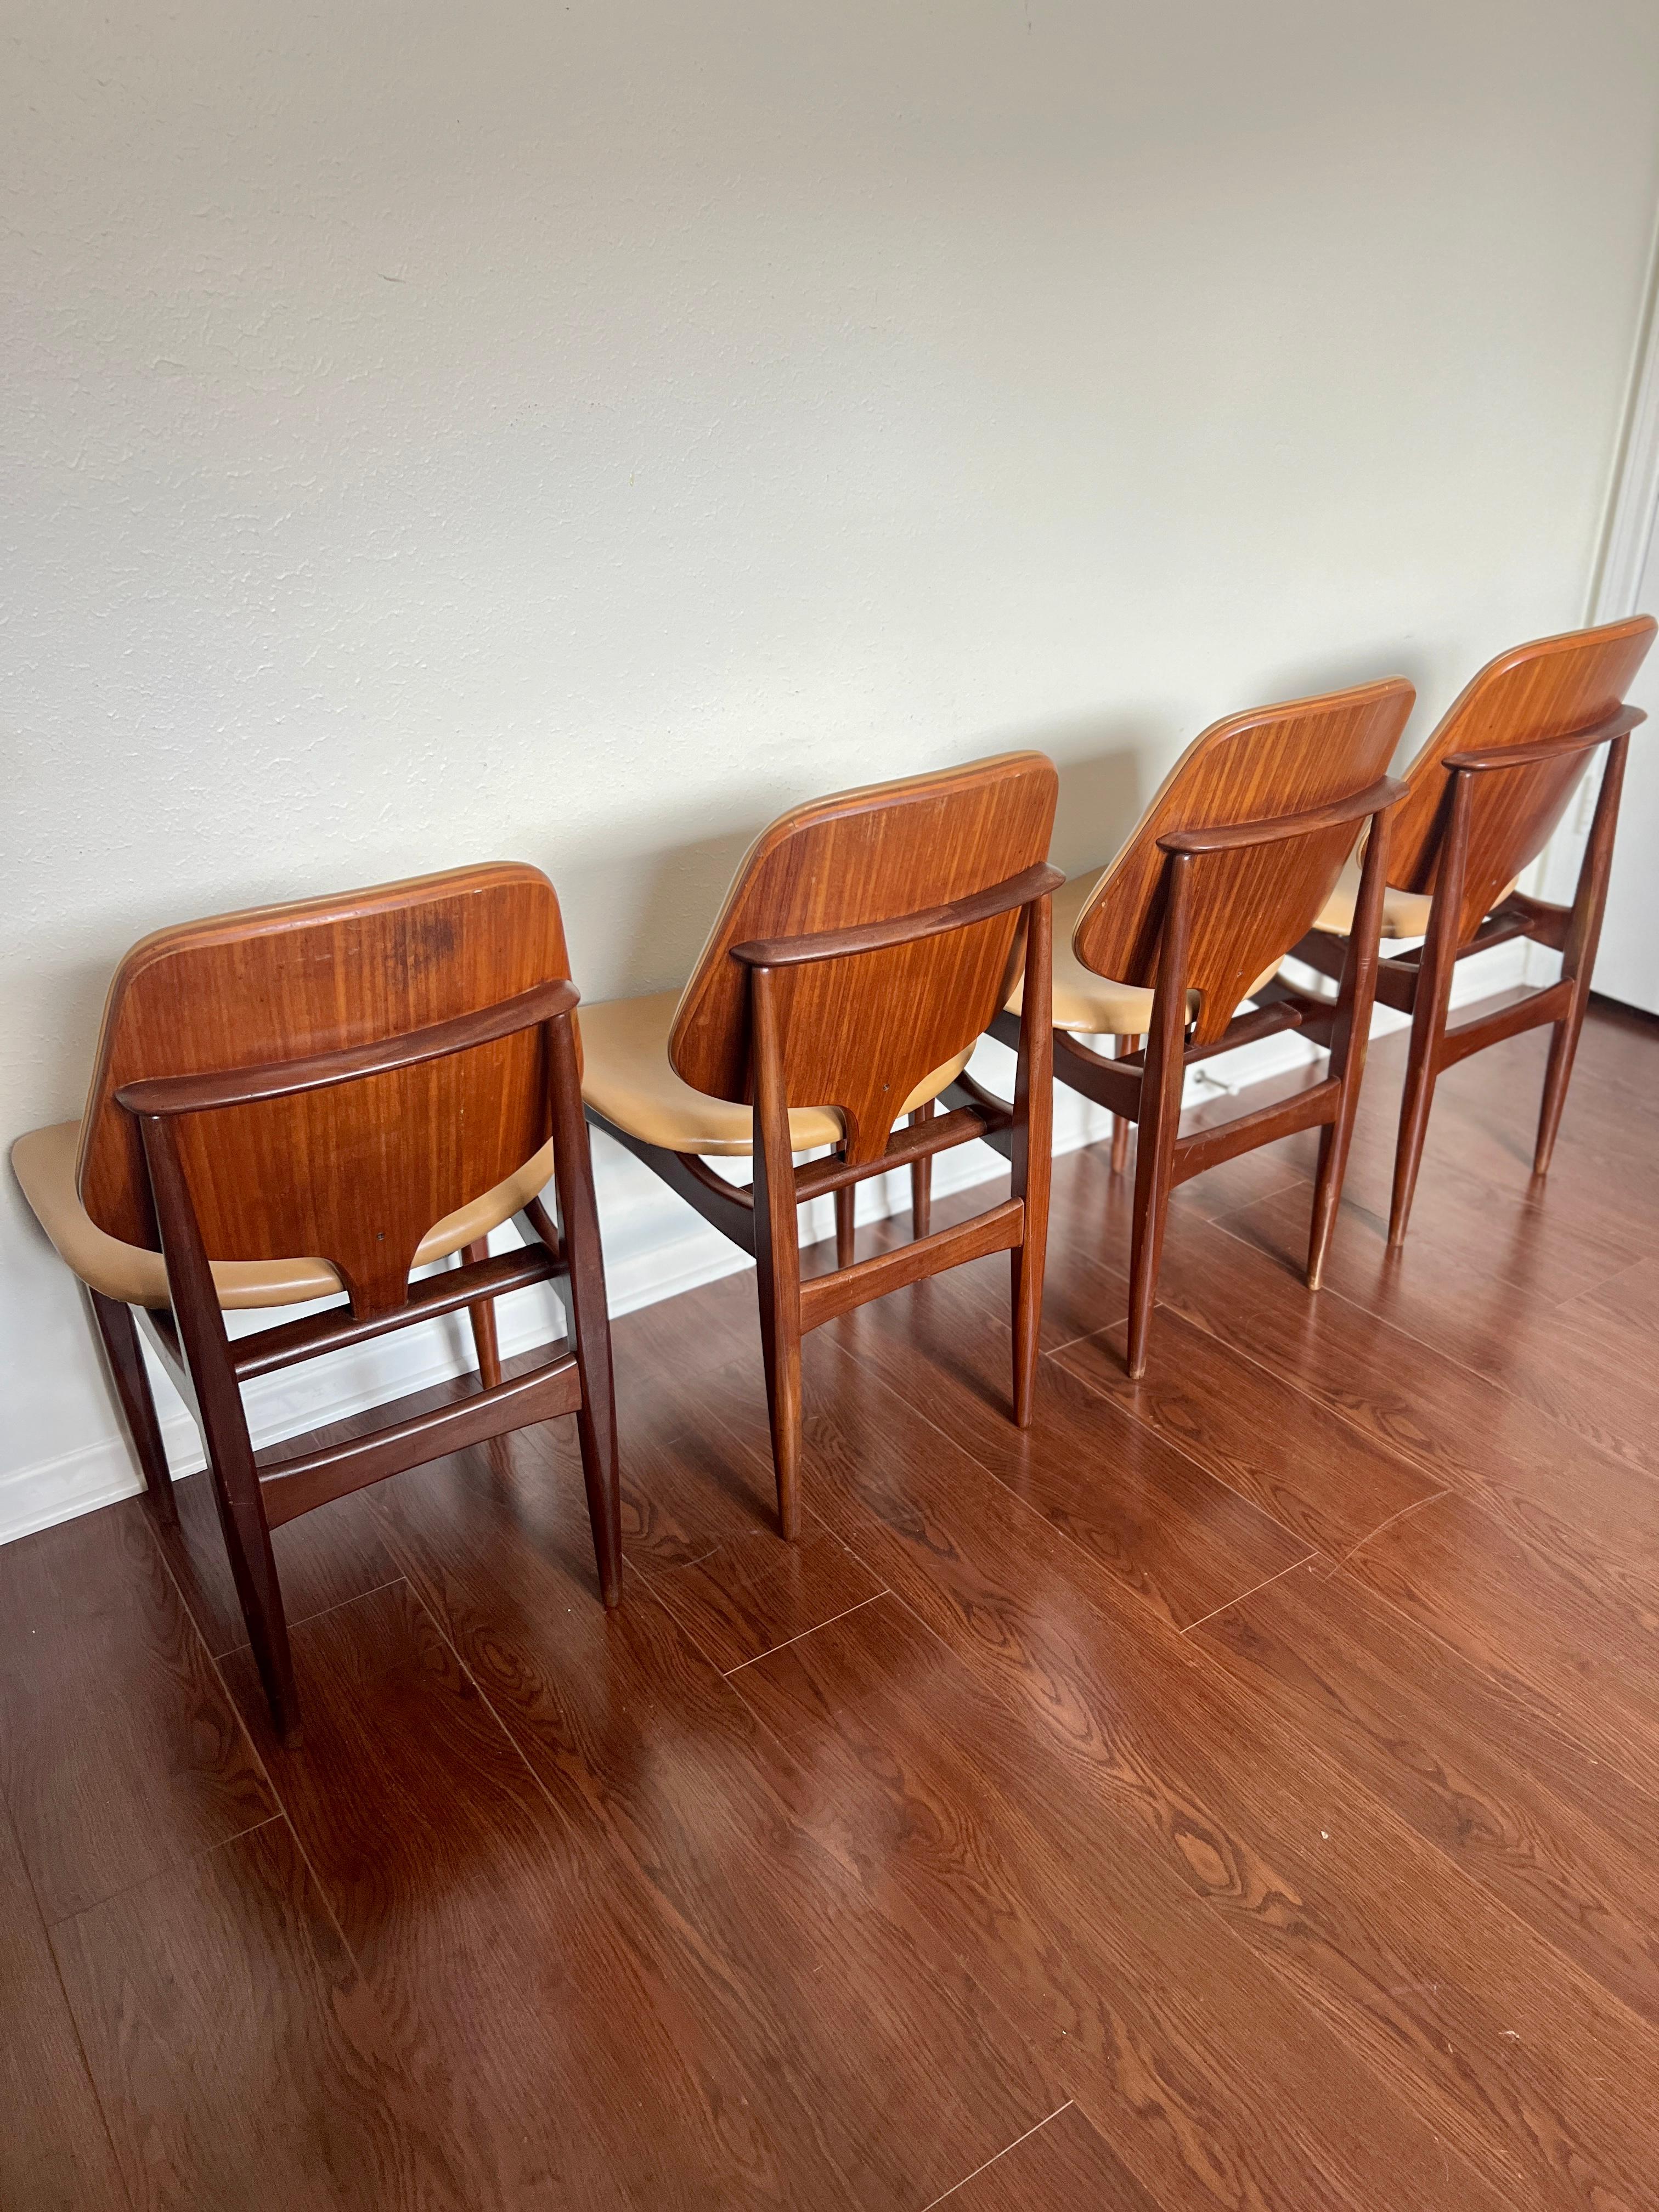 Teak A set of 4 mid century modern dining chairs by Elliots of Newbury